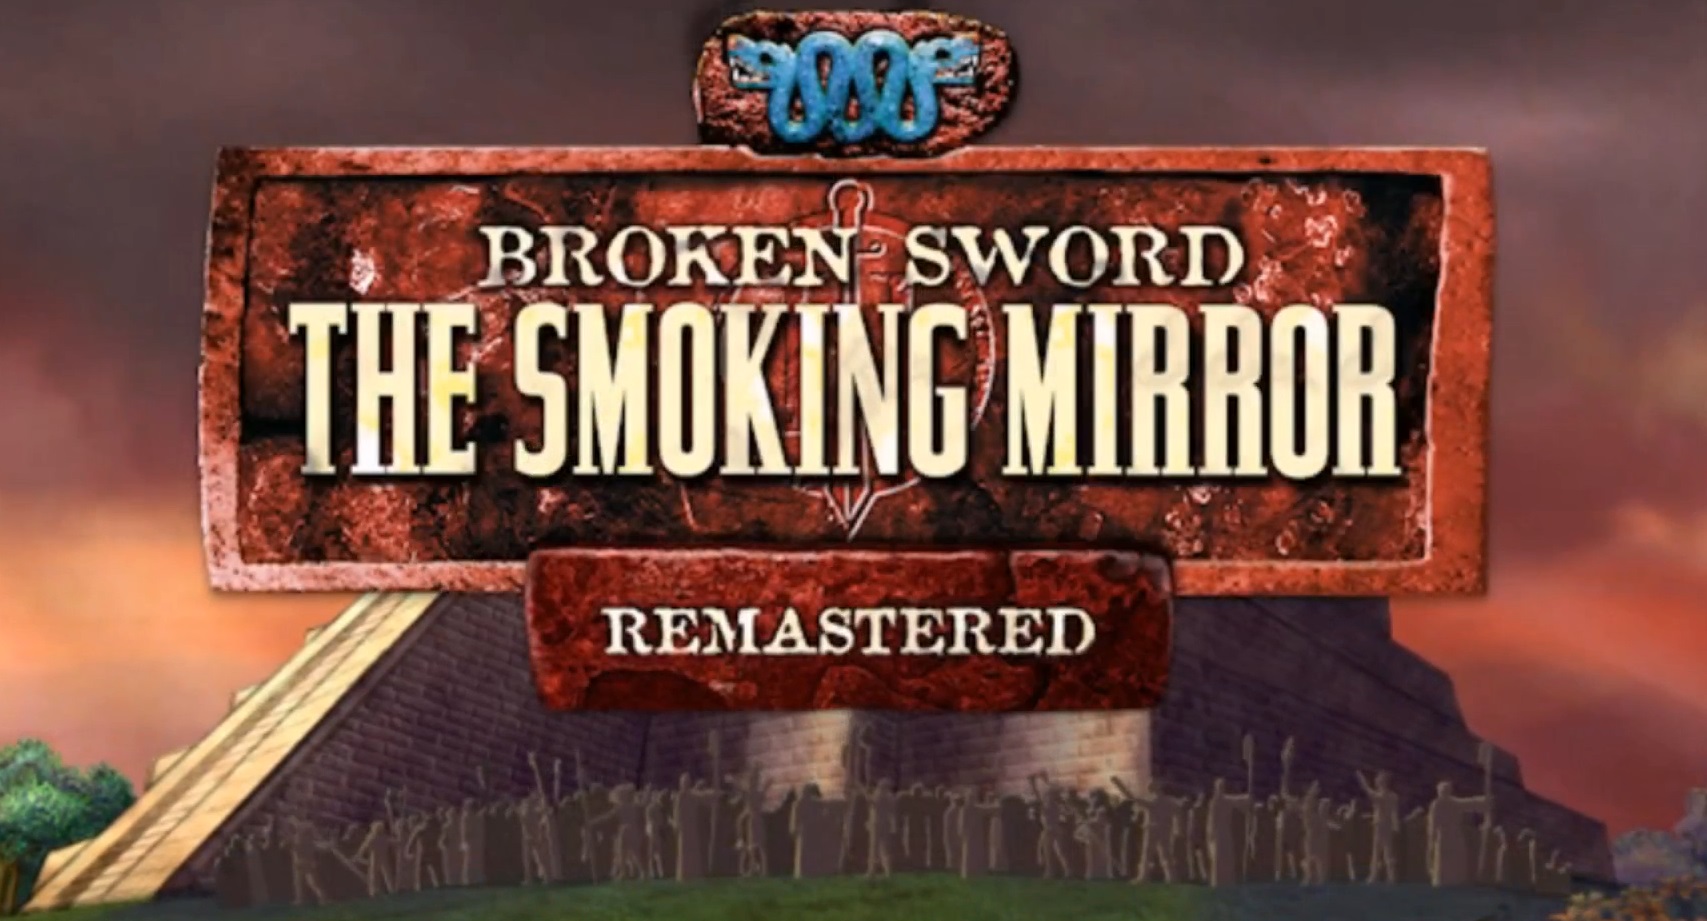 Broken sword smoking mirror